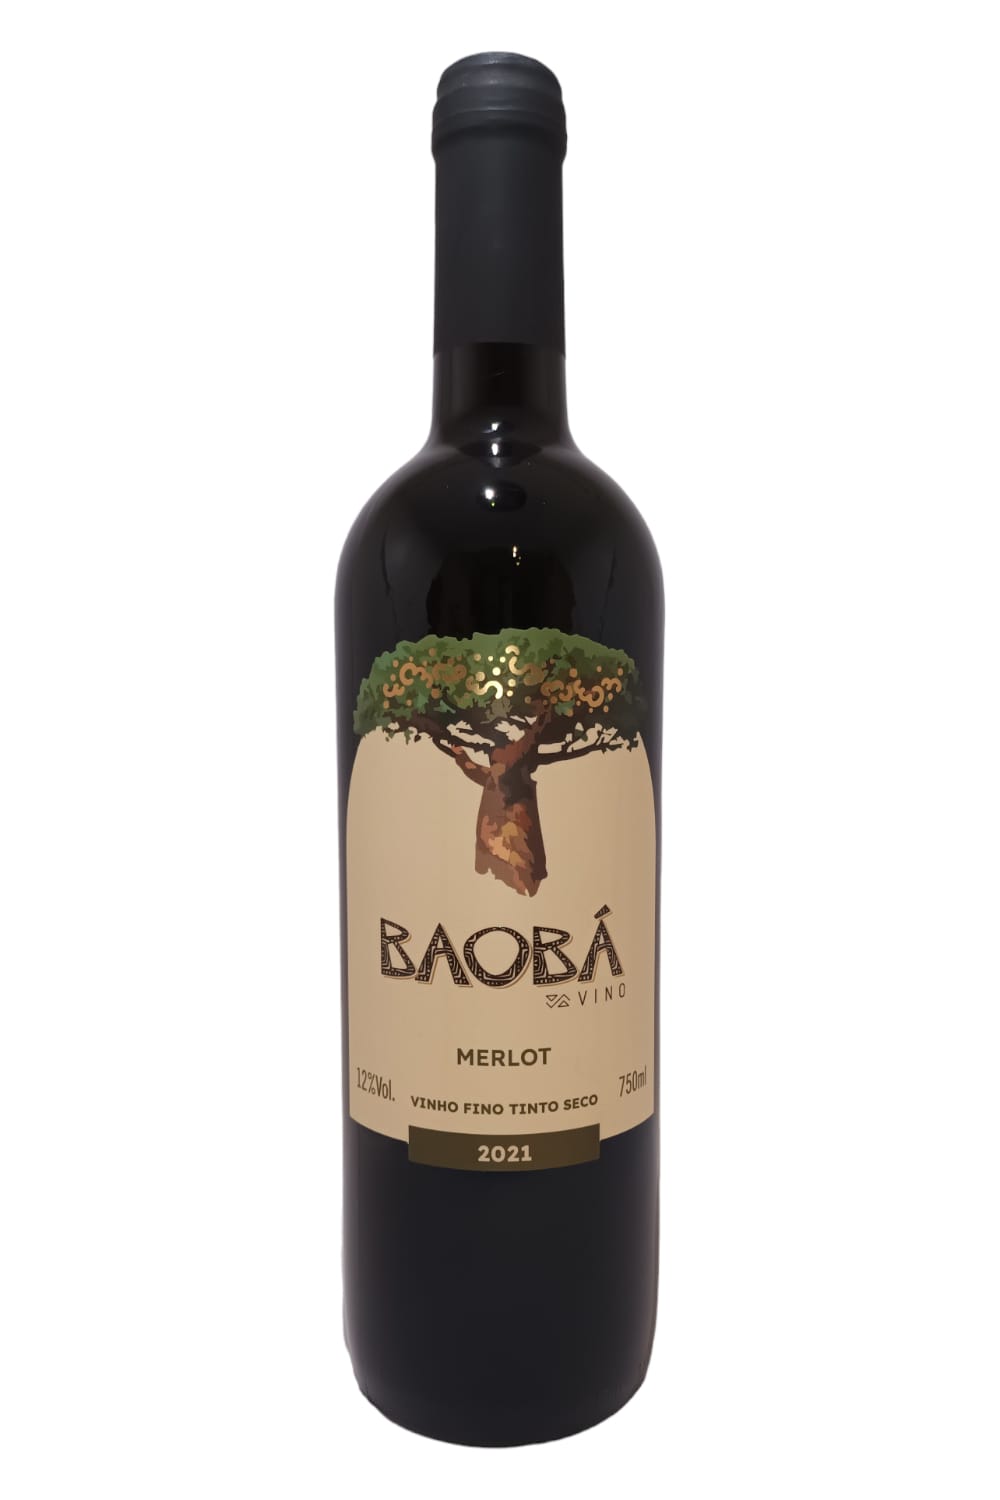 Baobá Vino Merlot 2021